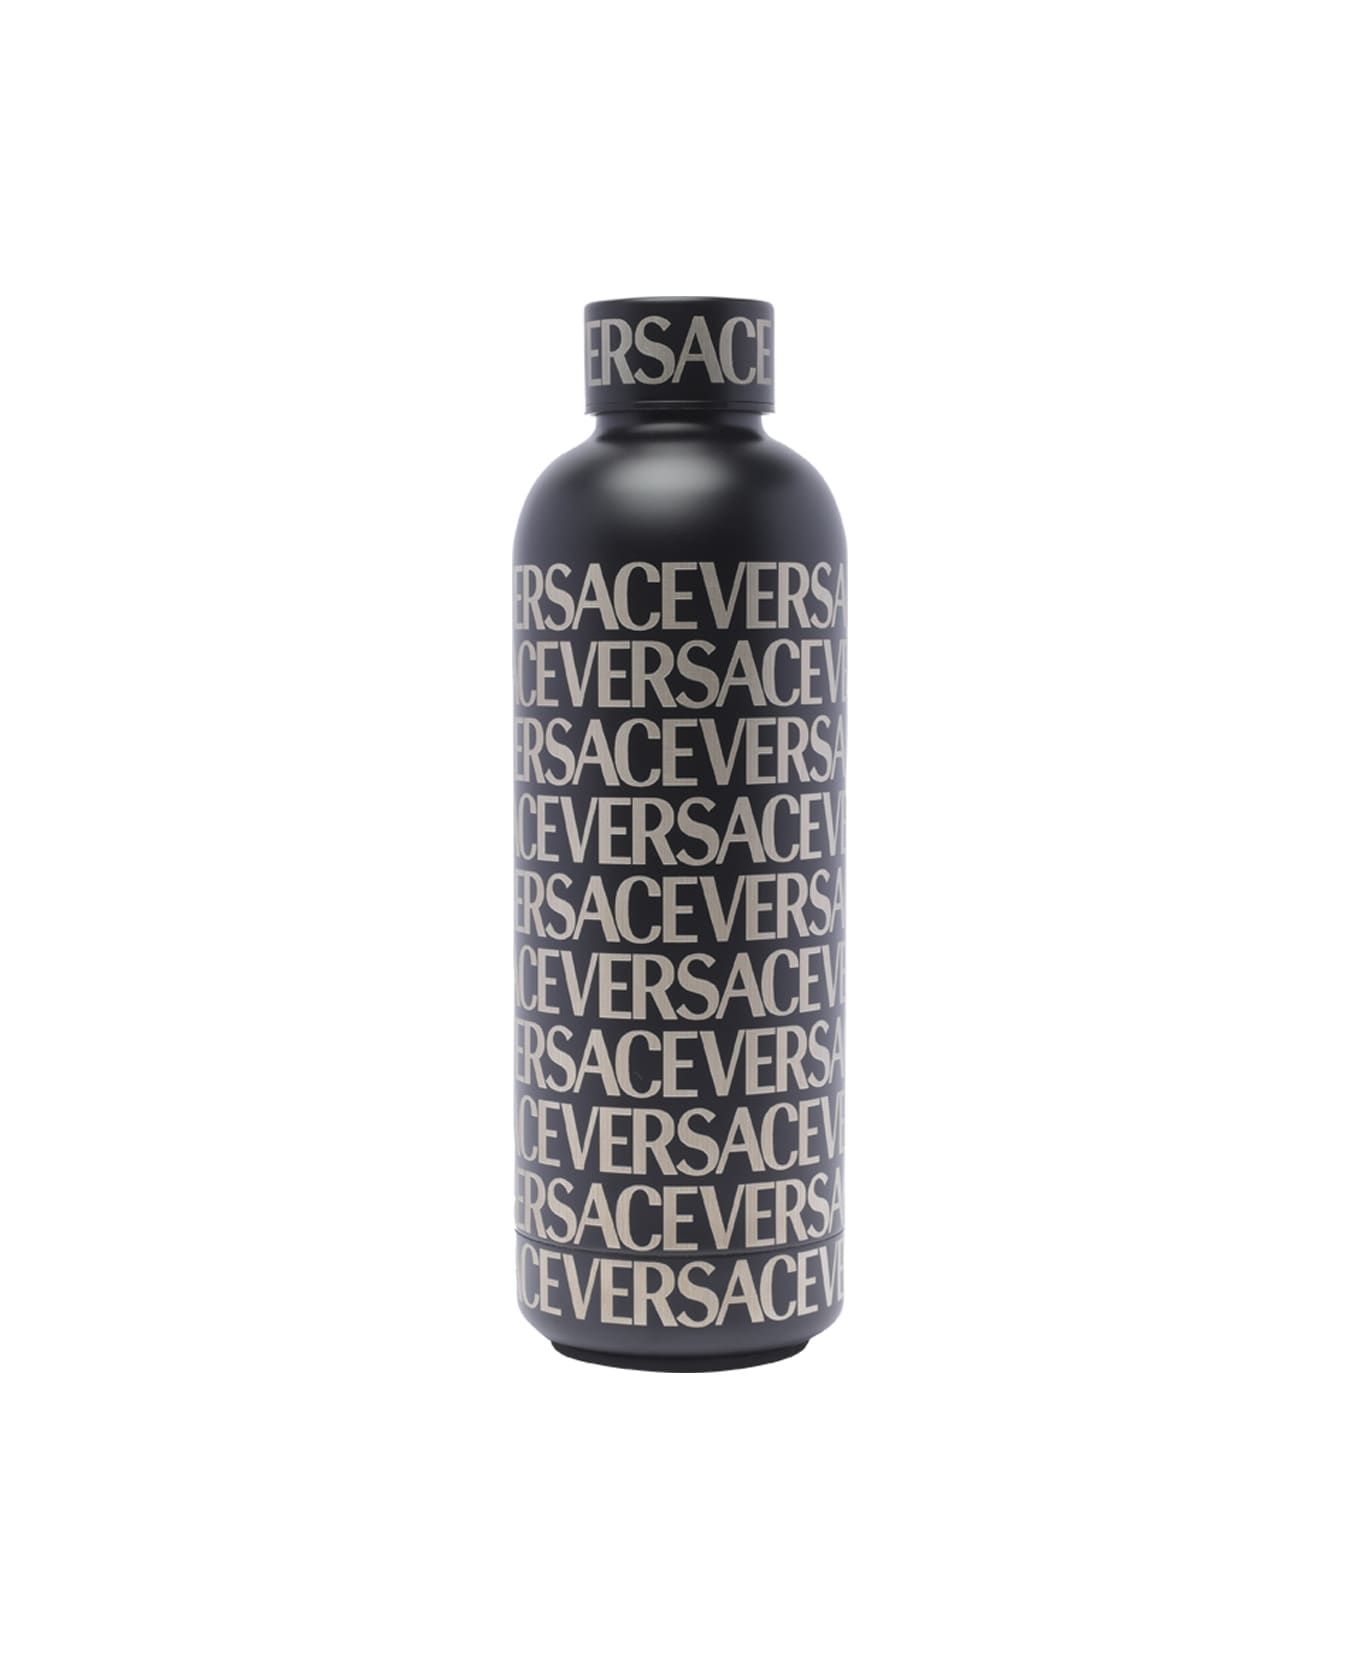 Versace Allover Water Bottle - Black